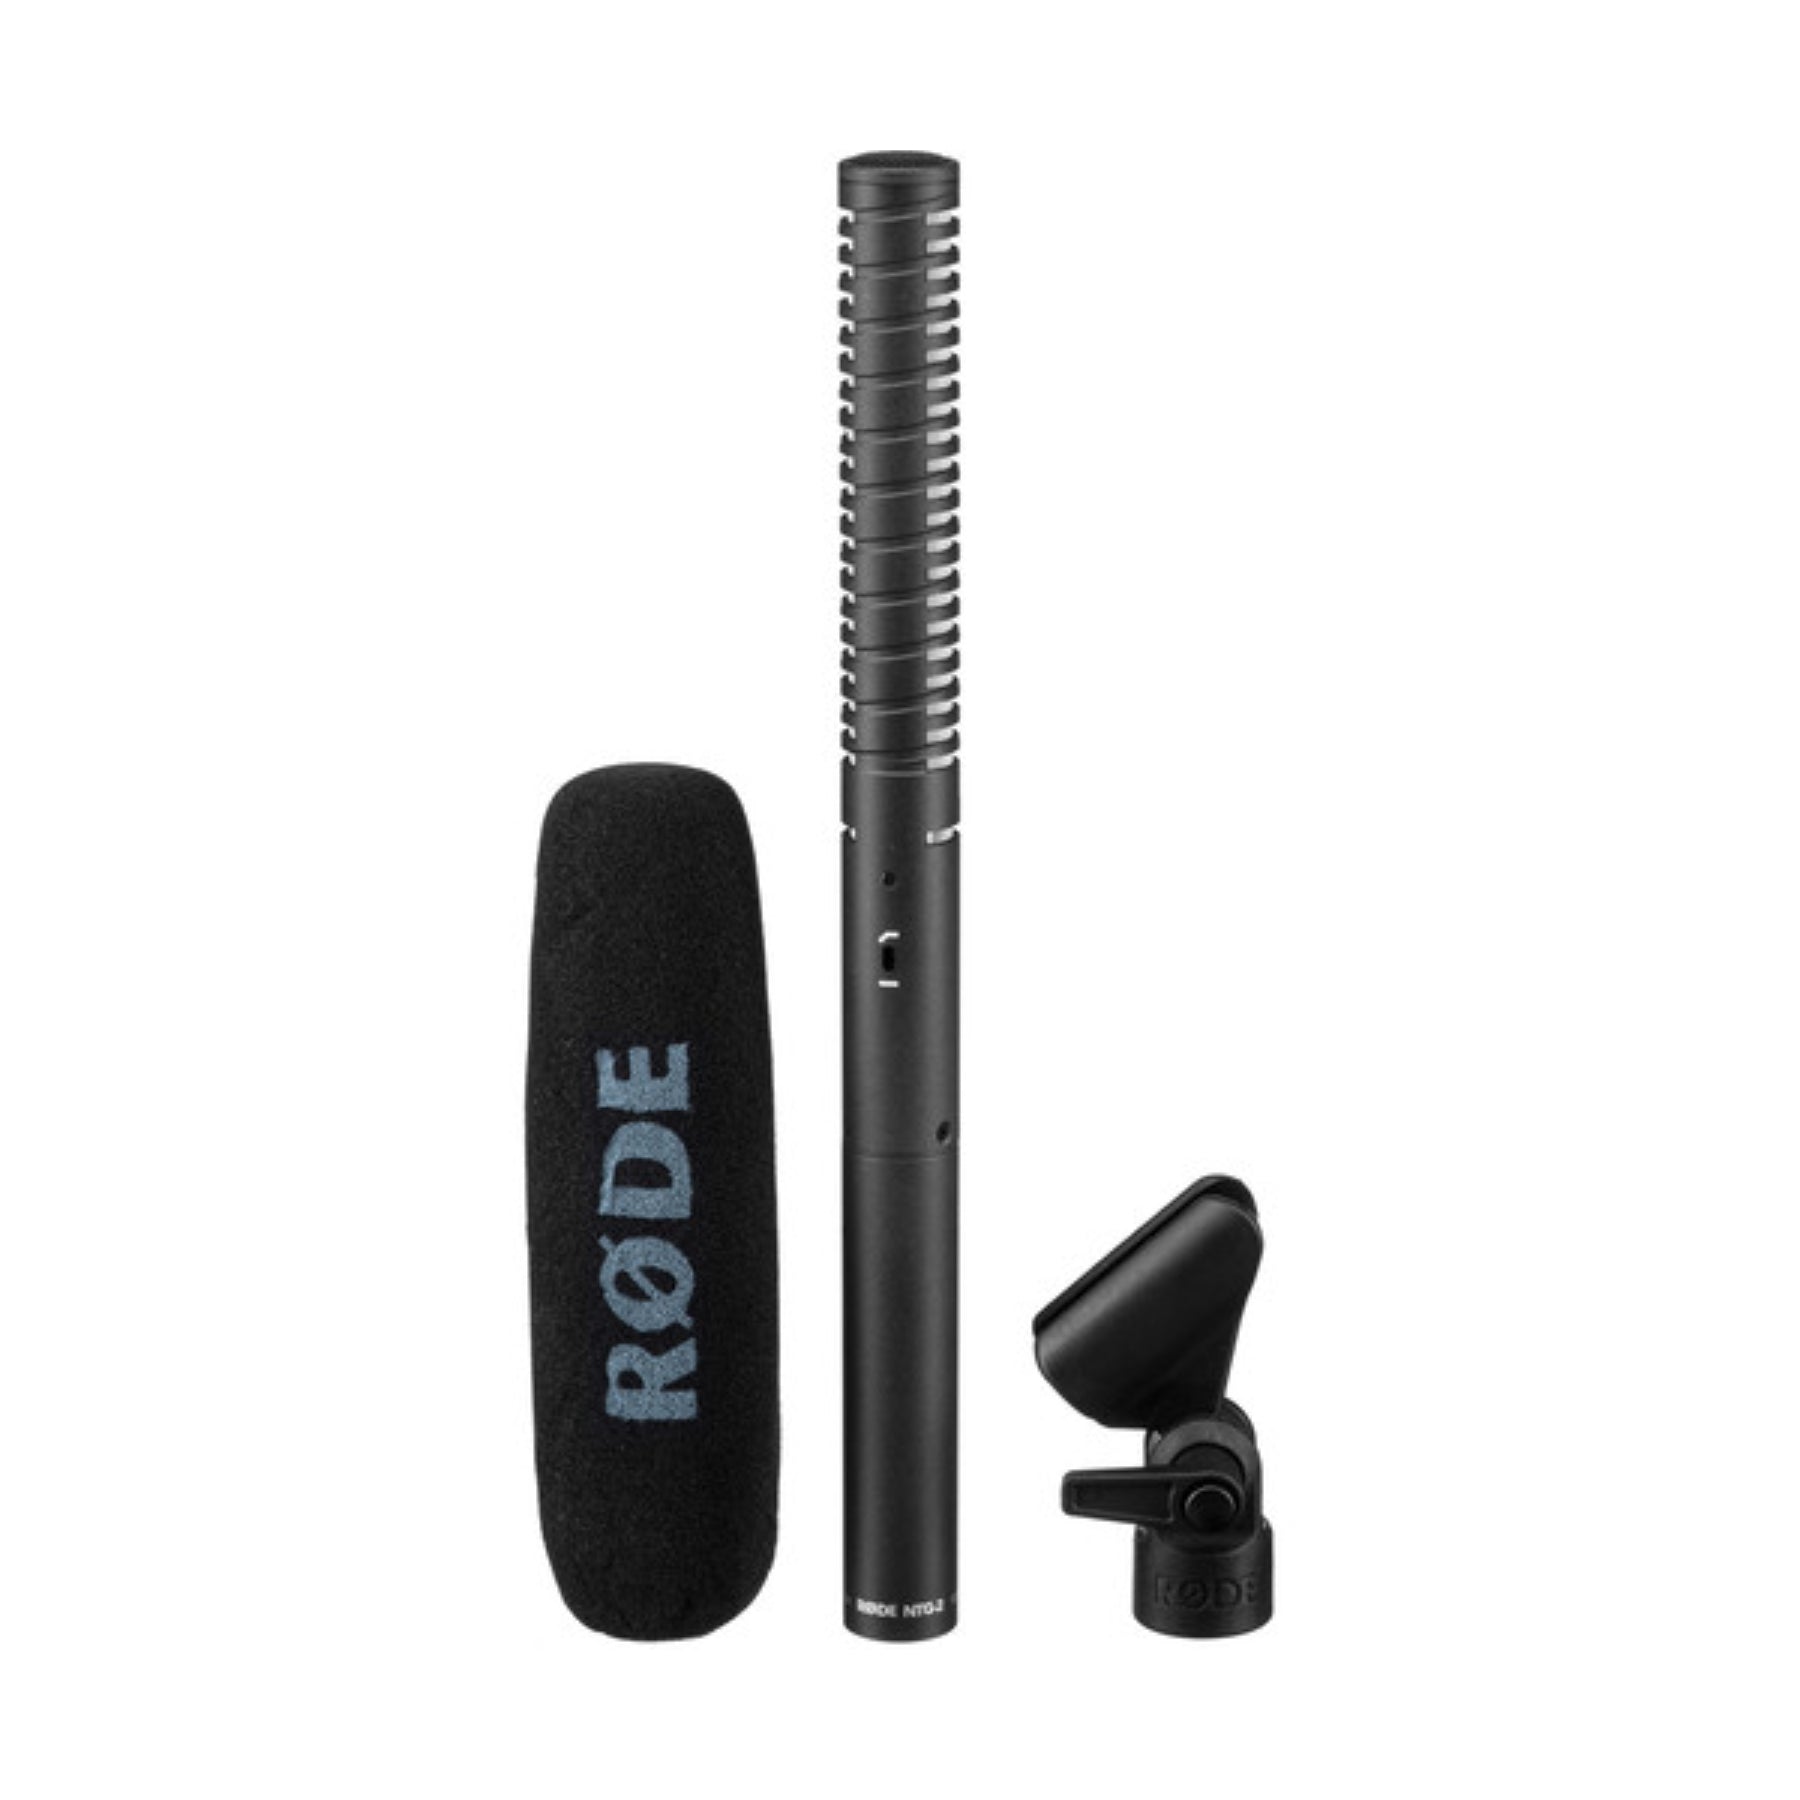 Buy Rode NTG2 Shotgun Microphone | Topic Store